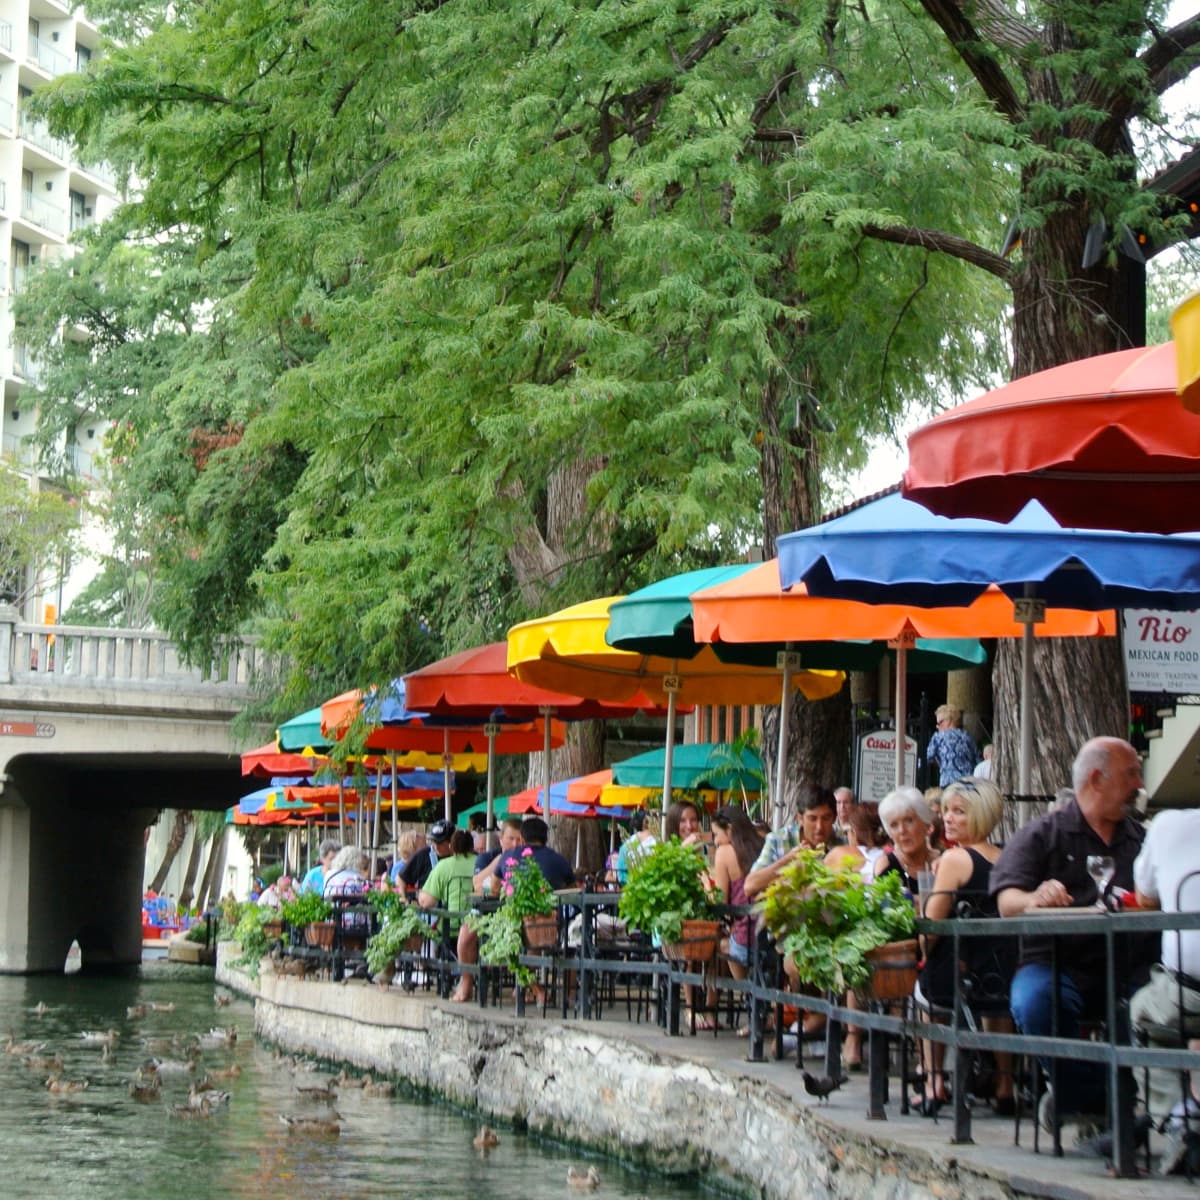 Stroll the Past, Present and Future Along San Antonio's River Walk